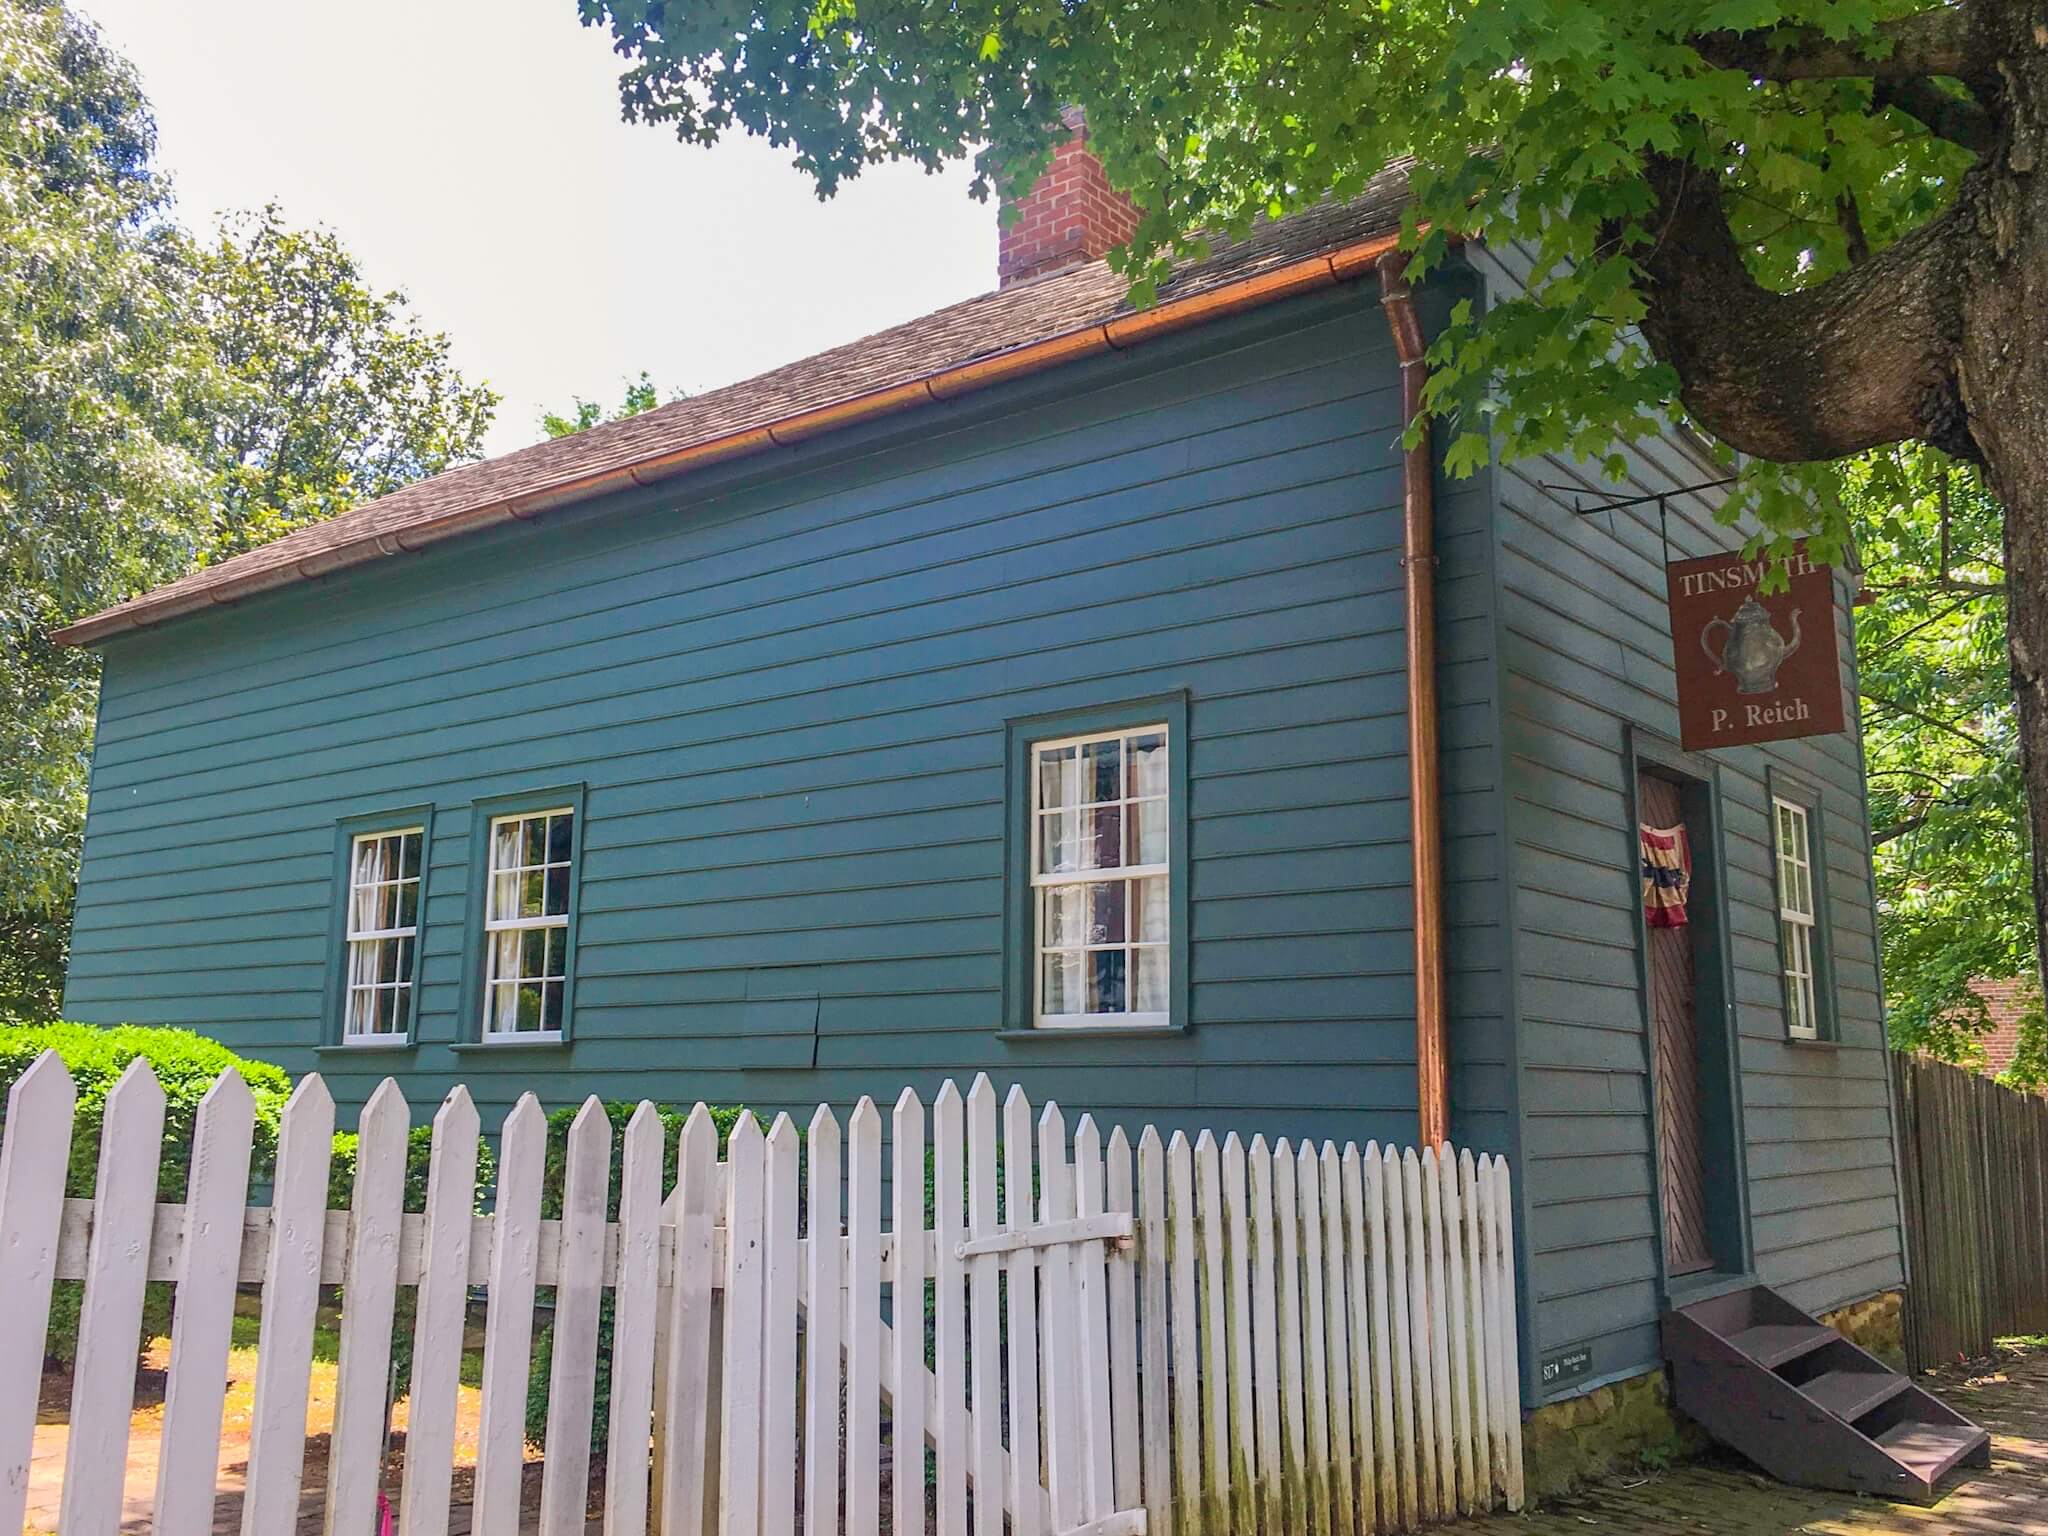 Old Salem Village, Museum, Moravian
Winston-Salem, North Carolina